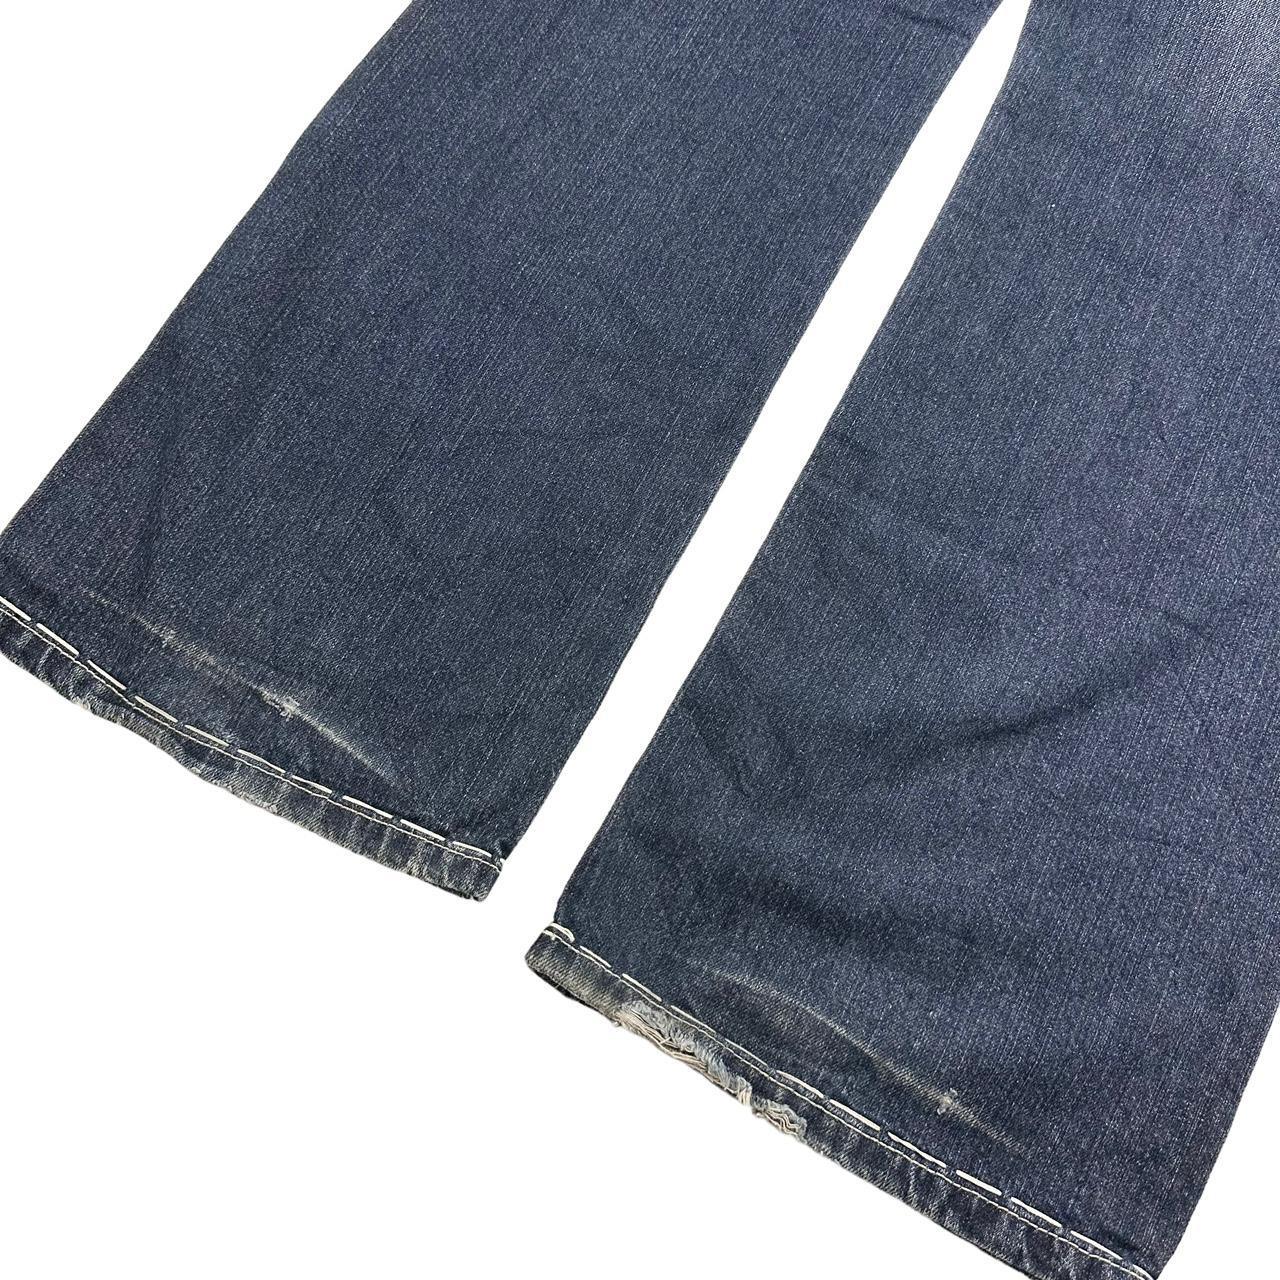 Vintage Big Stitch Japanese denim jeans W38 - Known Source